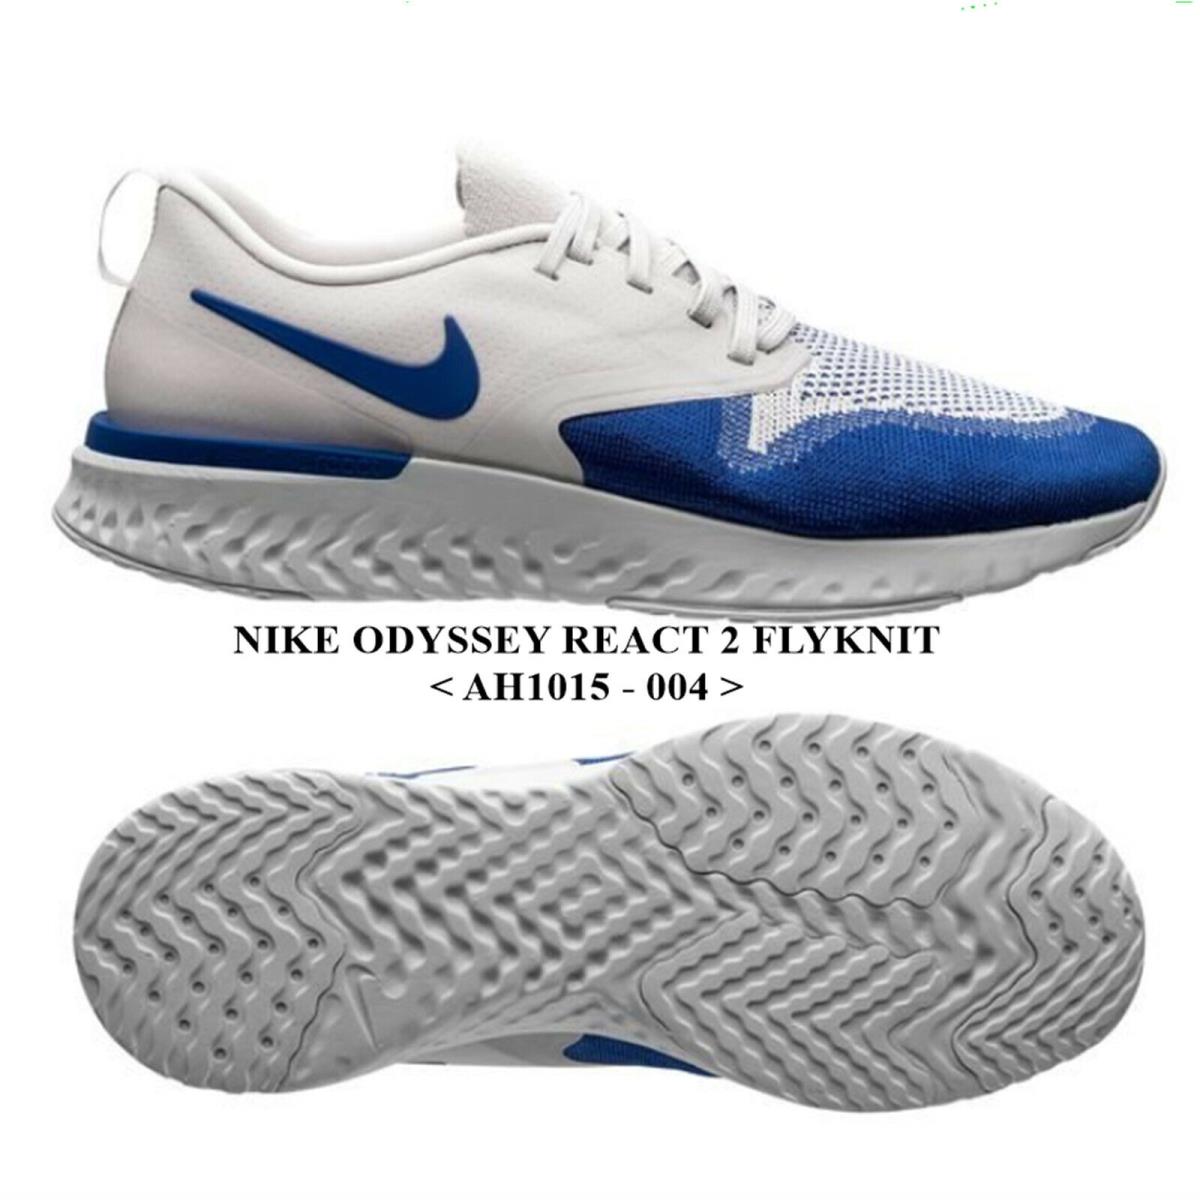 Nike Odyssey React 2 Flyknit AH1015 - 004 Men`s Running Shoes.nwb NO Lid - VAST GREY / GAME ROYAL , VAST GREY / GAME ROYAL Manufacturer